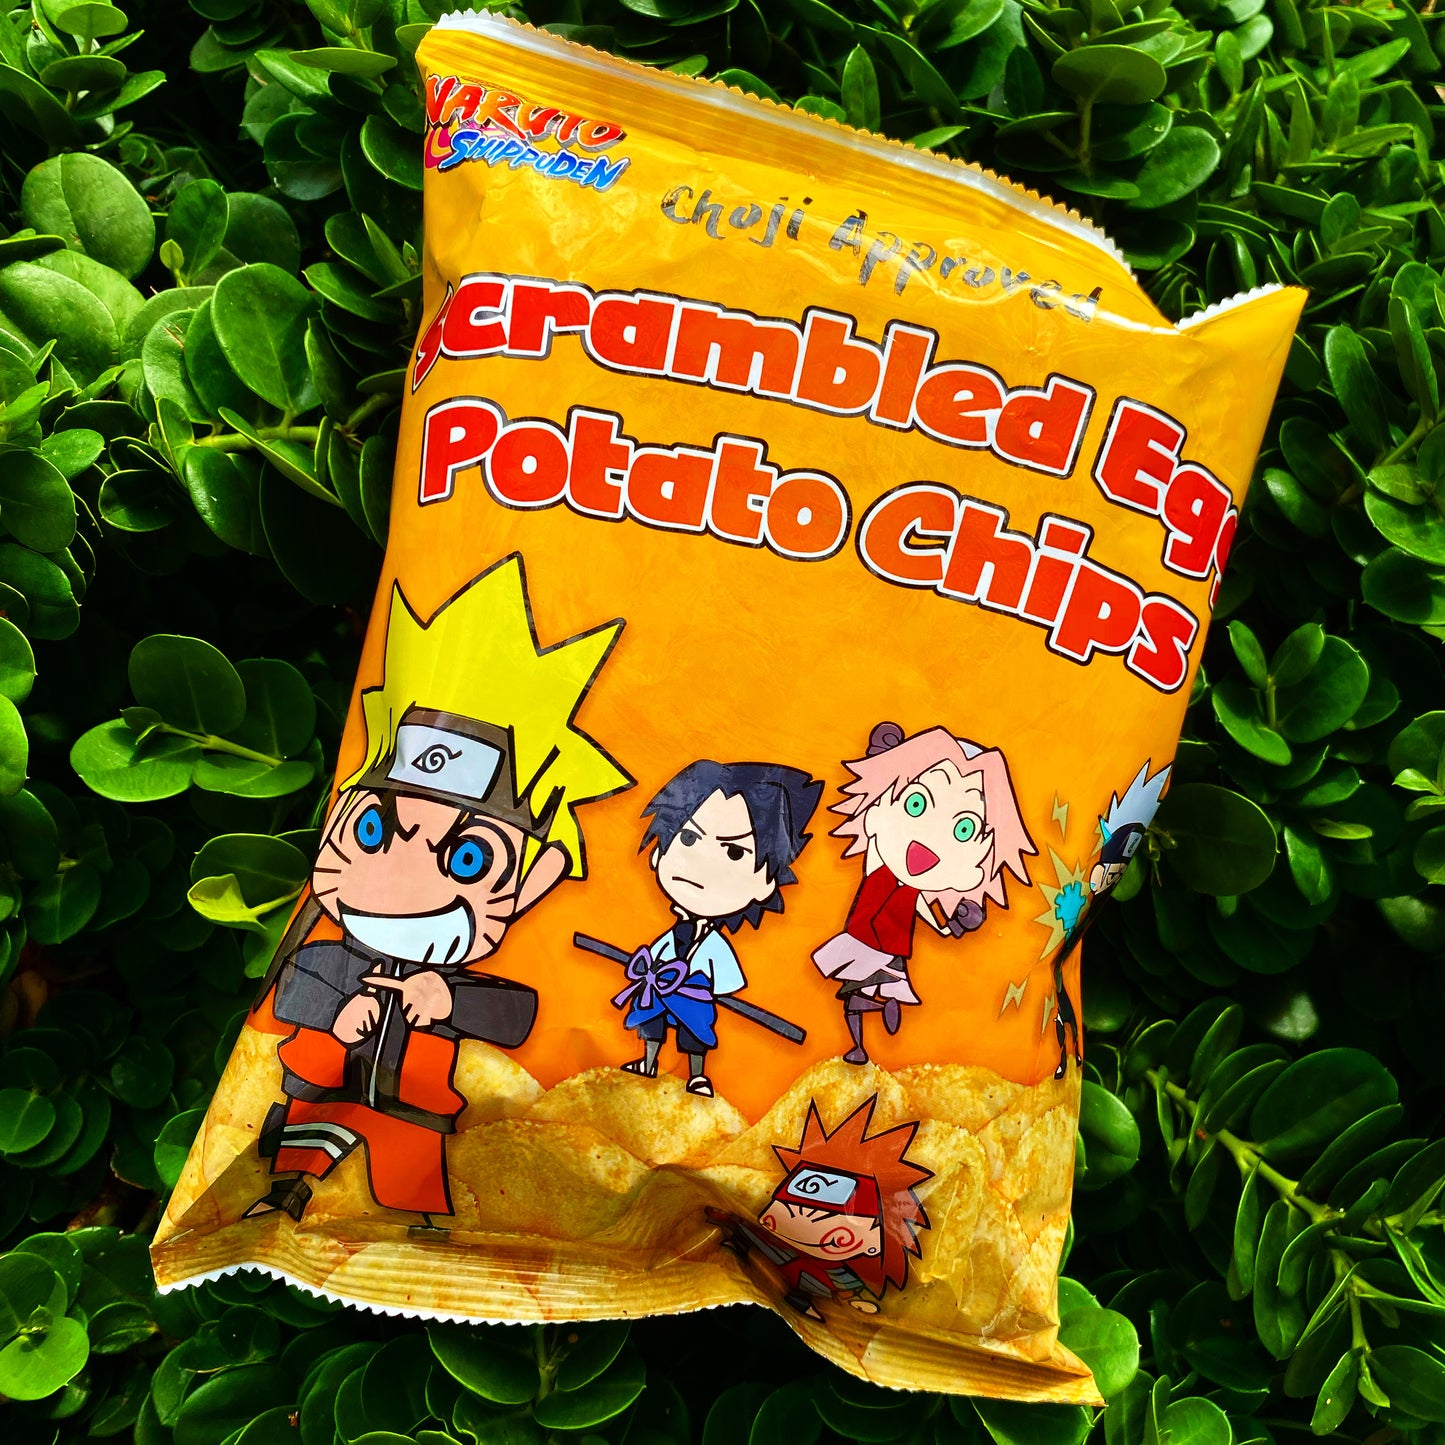 Naruto Shippuden Choji Approved Scrambled Egg Potato Chips (Taiwan)